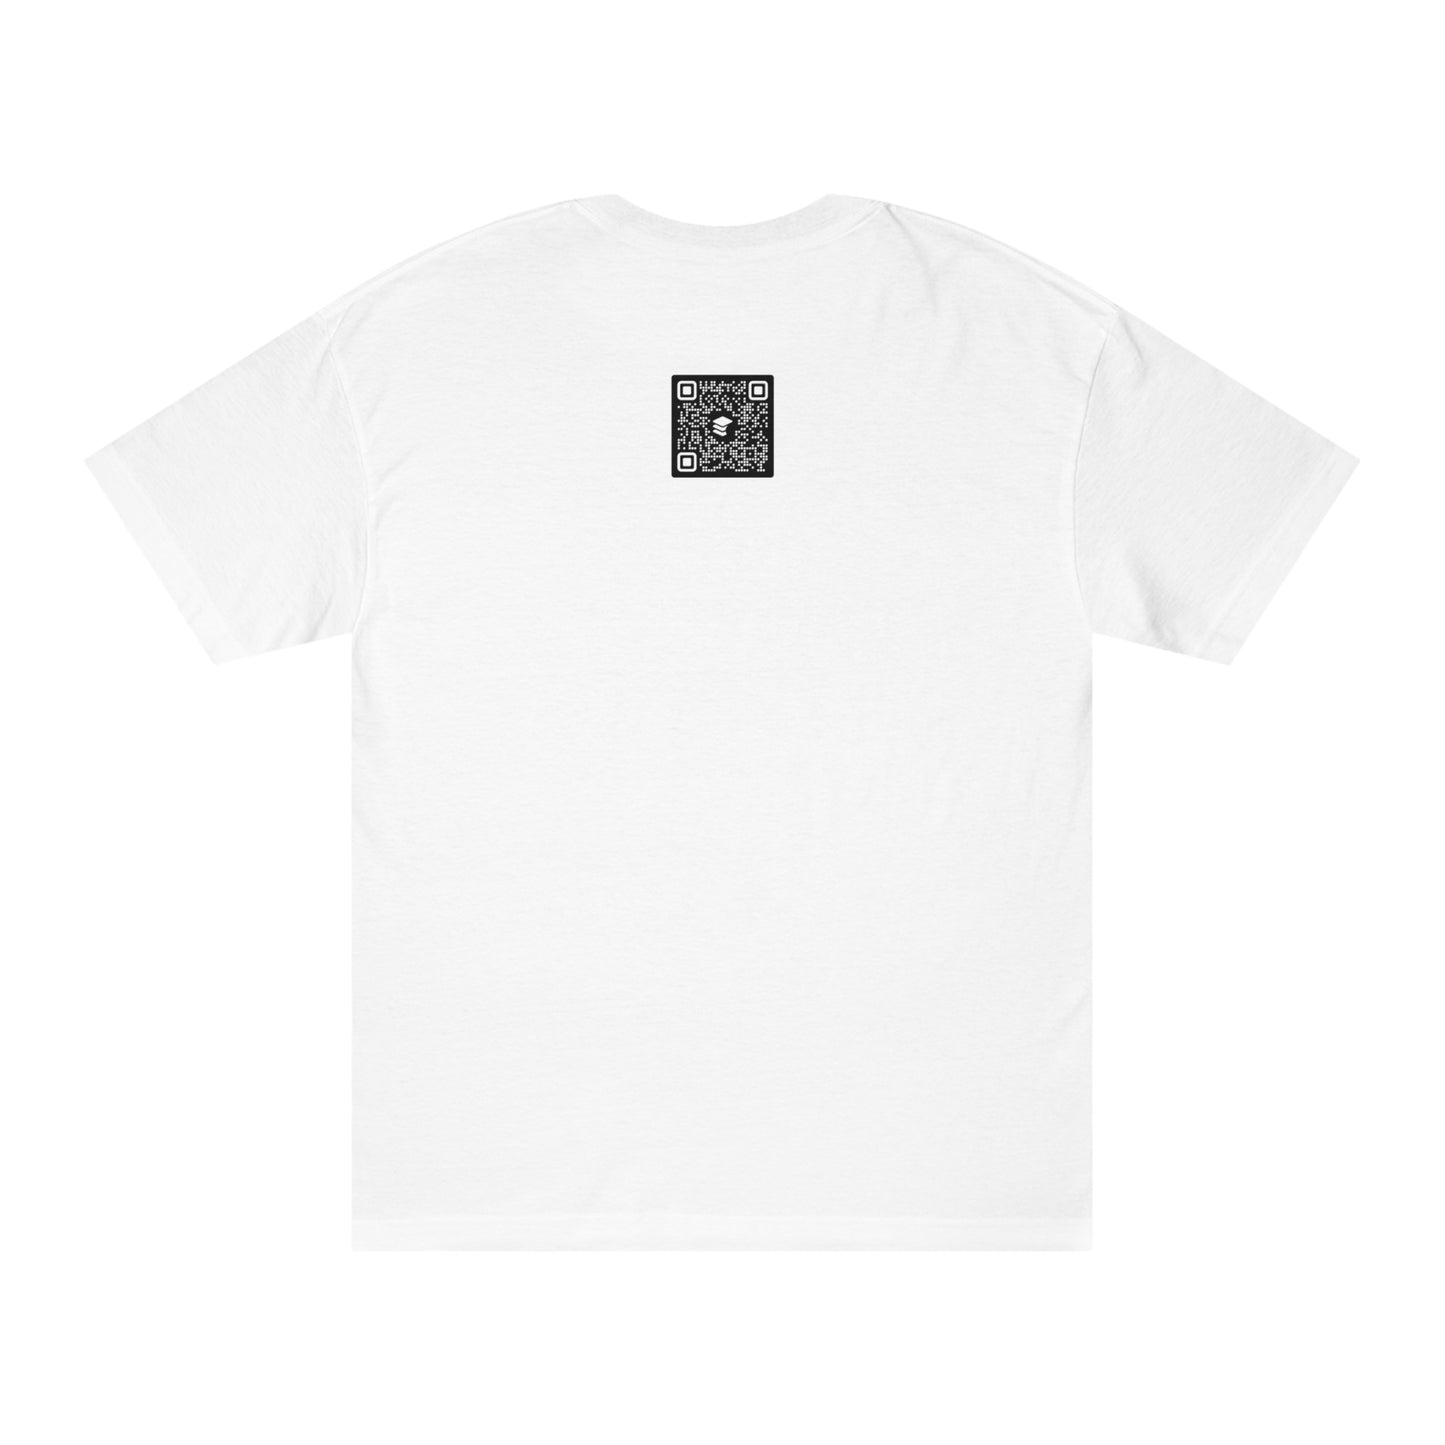 SOHO2nd - Playlist T-Shirt.